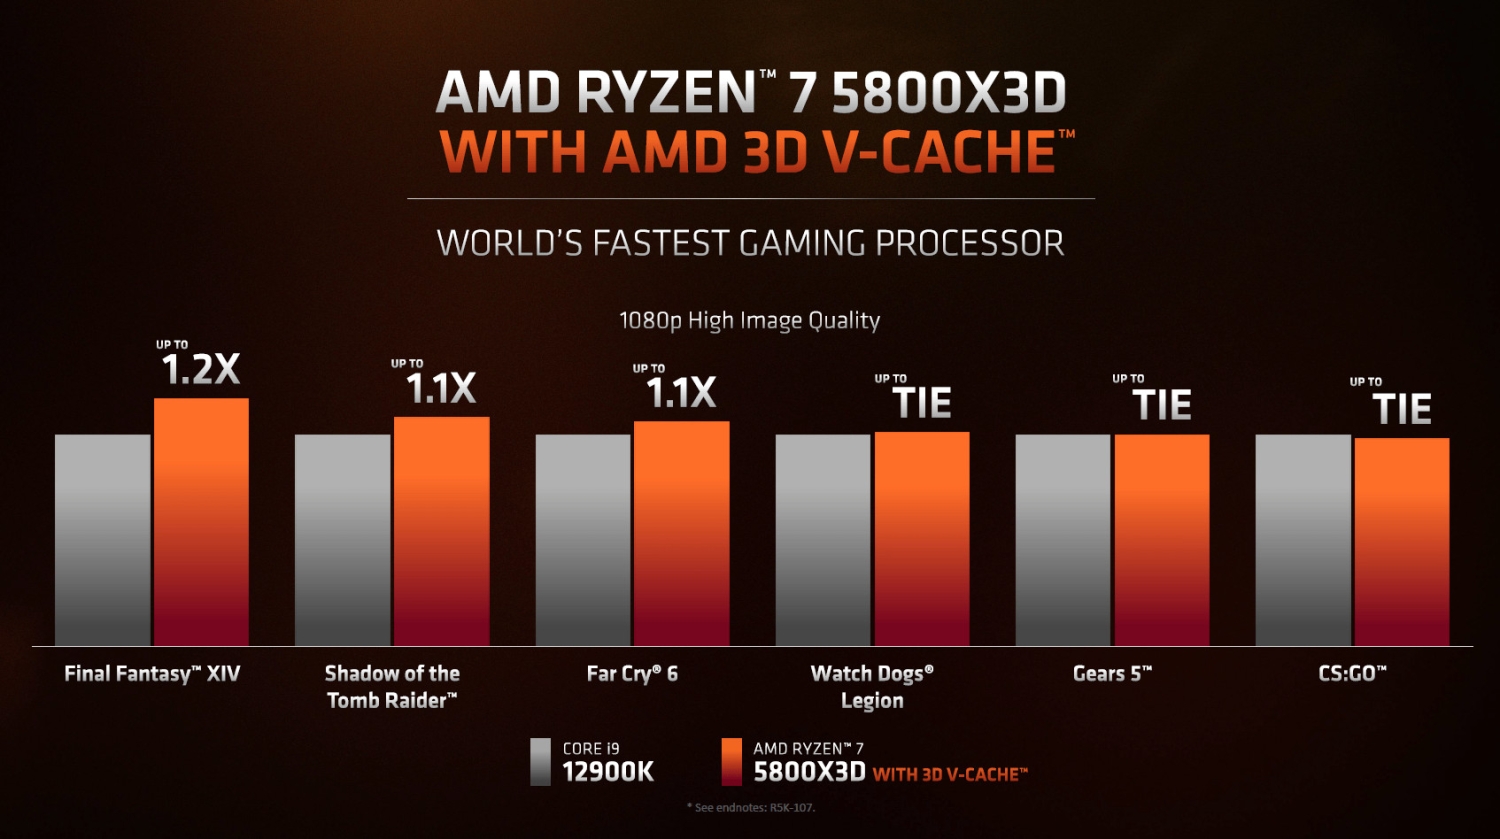 AMD Ryzen 7 5800X3D CPU beats Intel's new Core i912900K in gaming